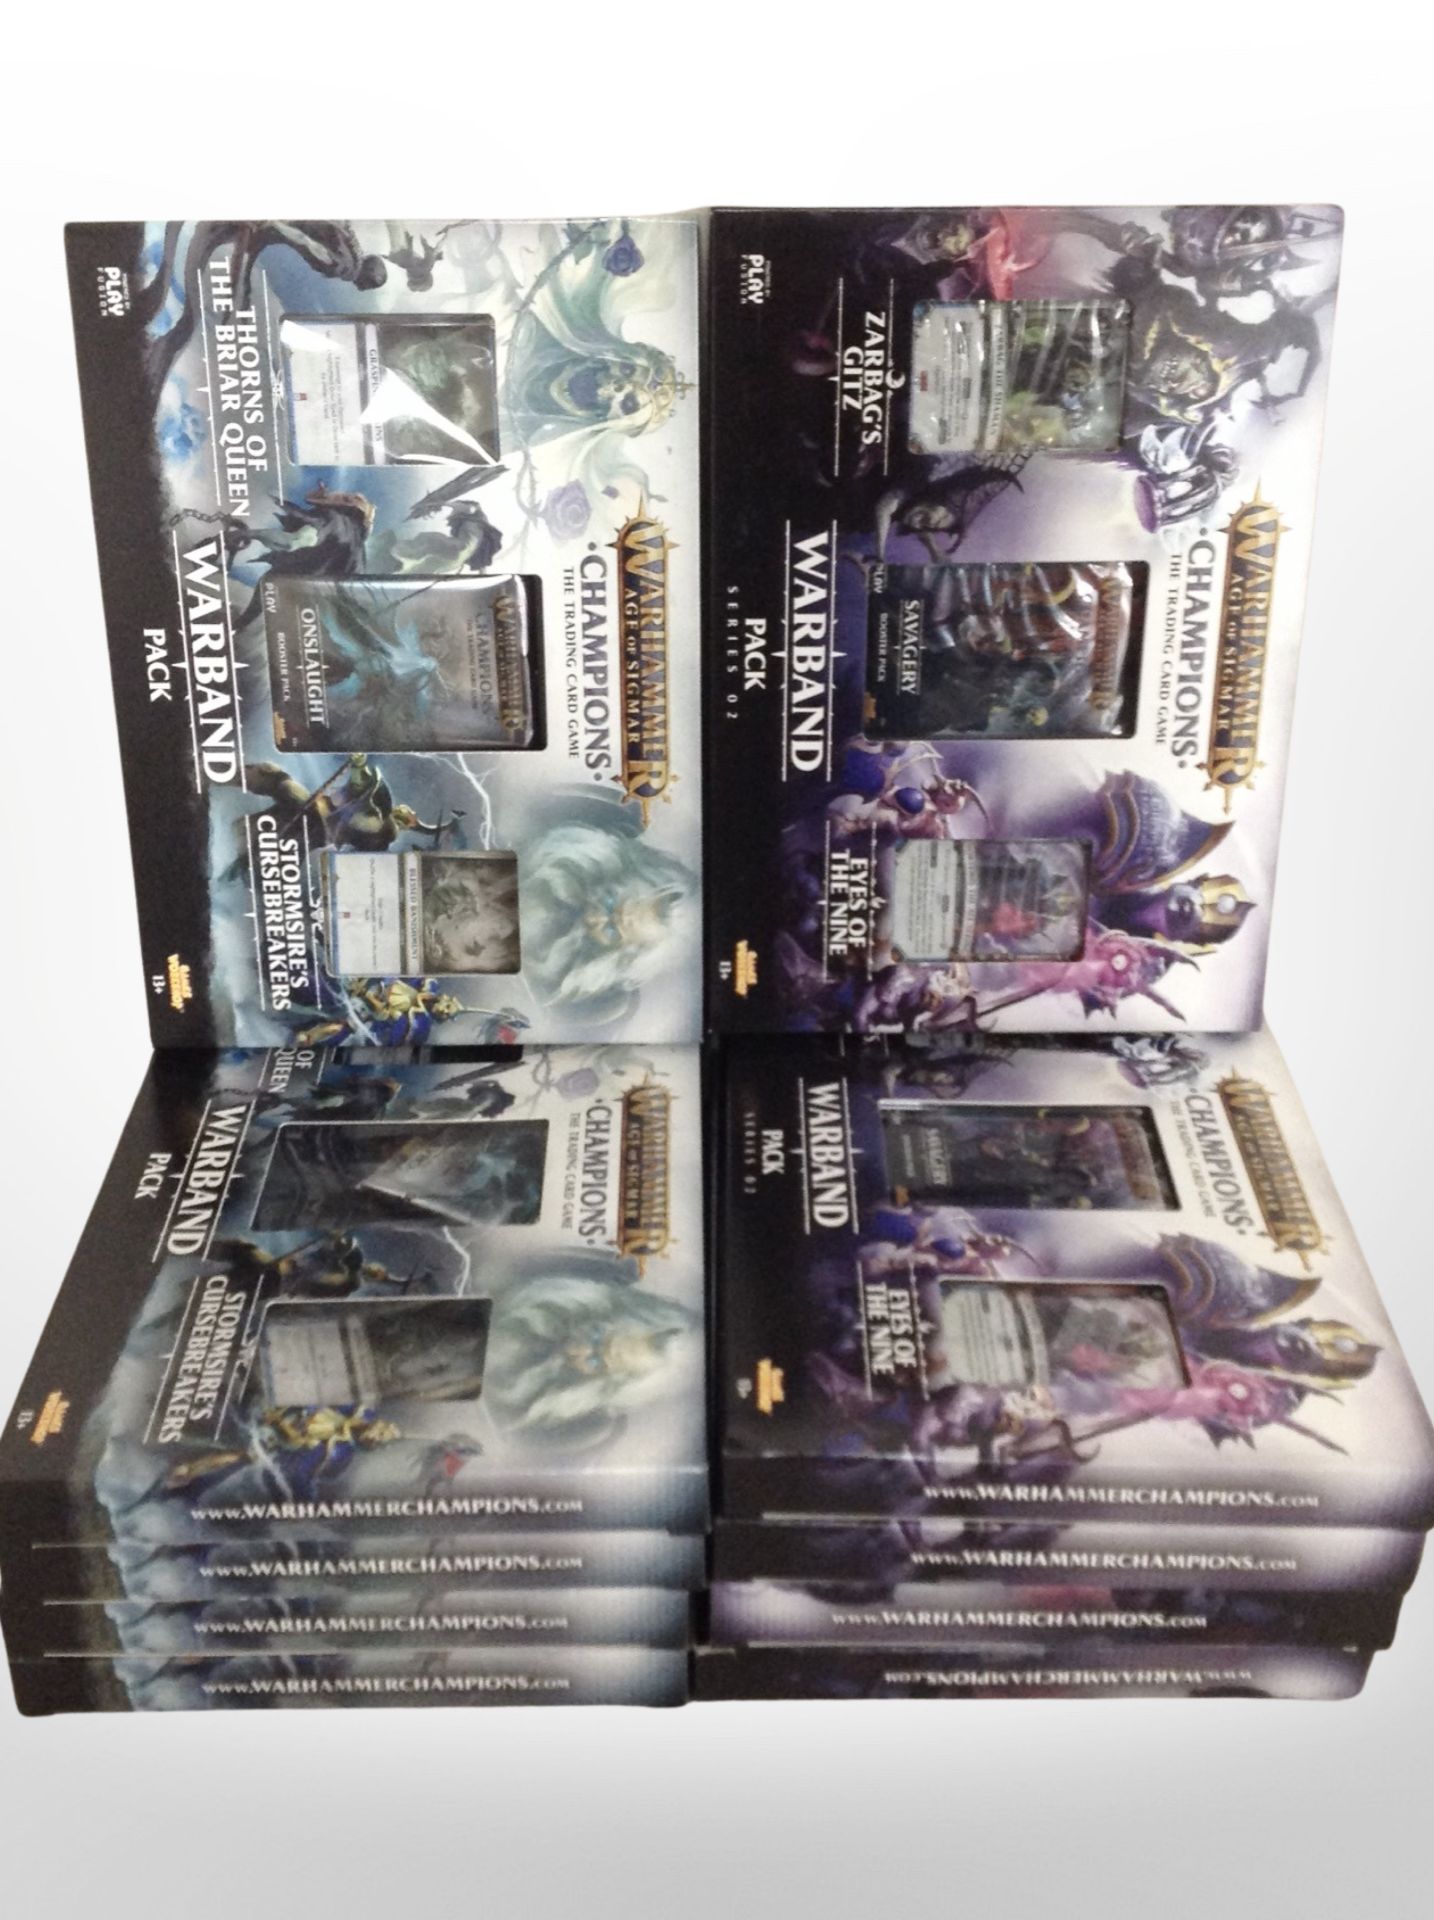 10 Games Workshop Warhammer Age of Sigmar trading card sets, boxed.